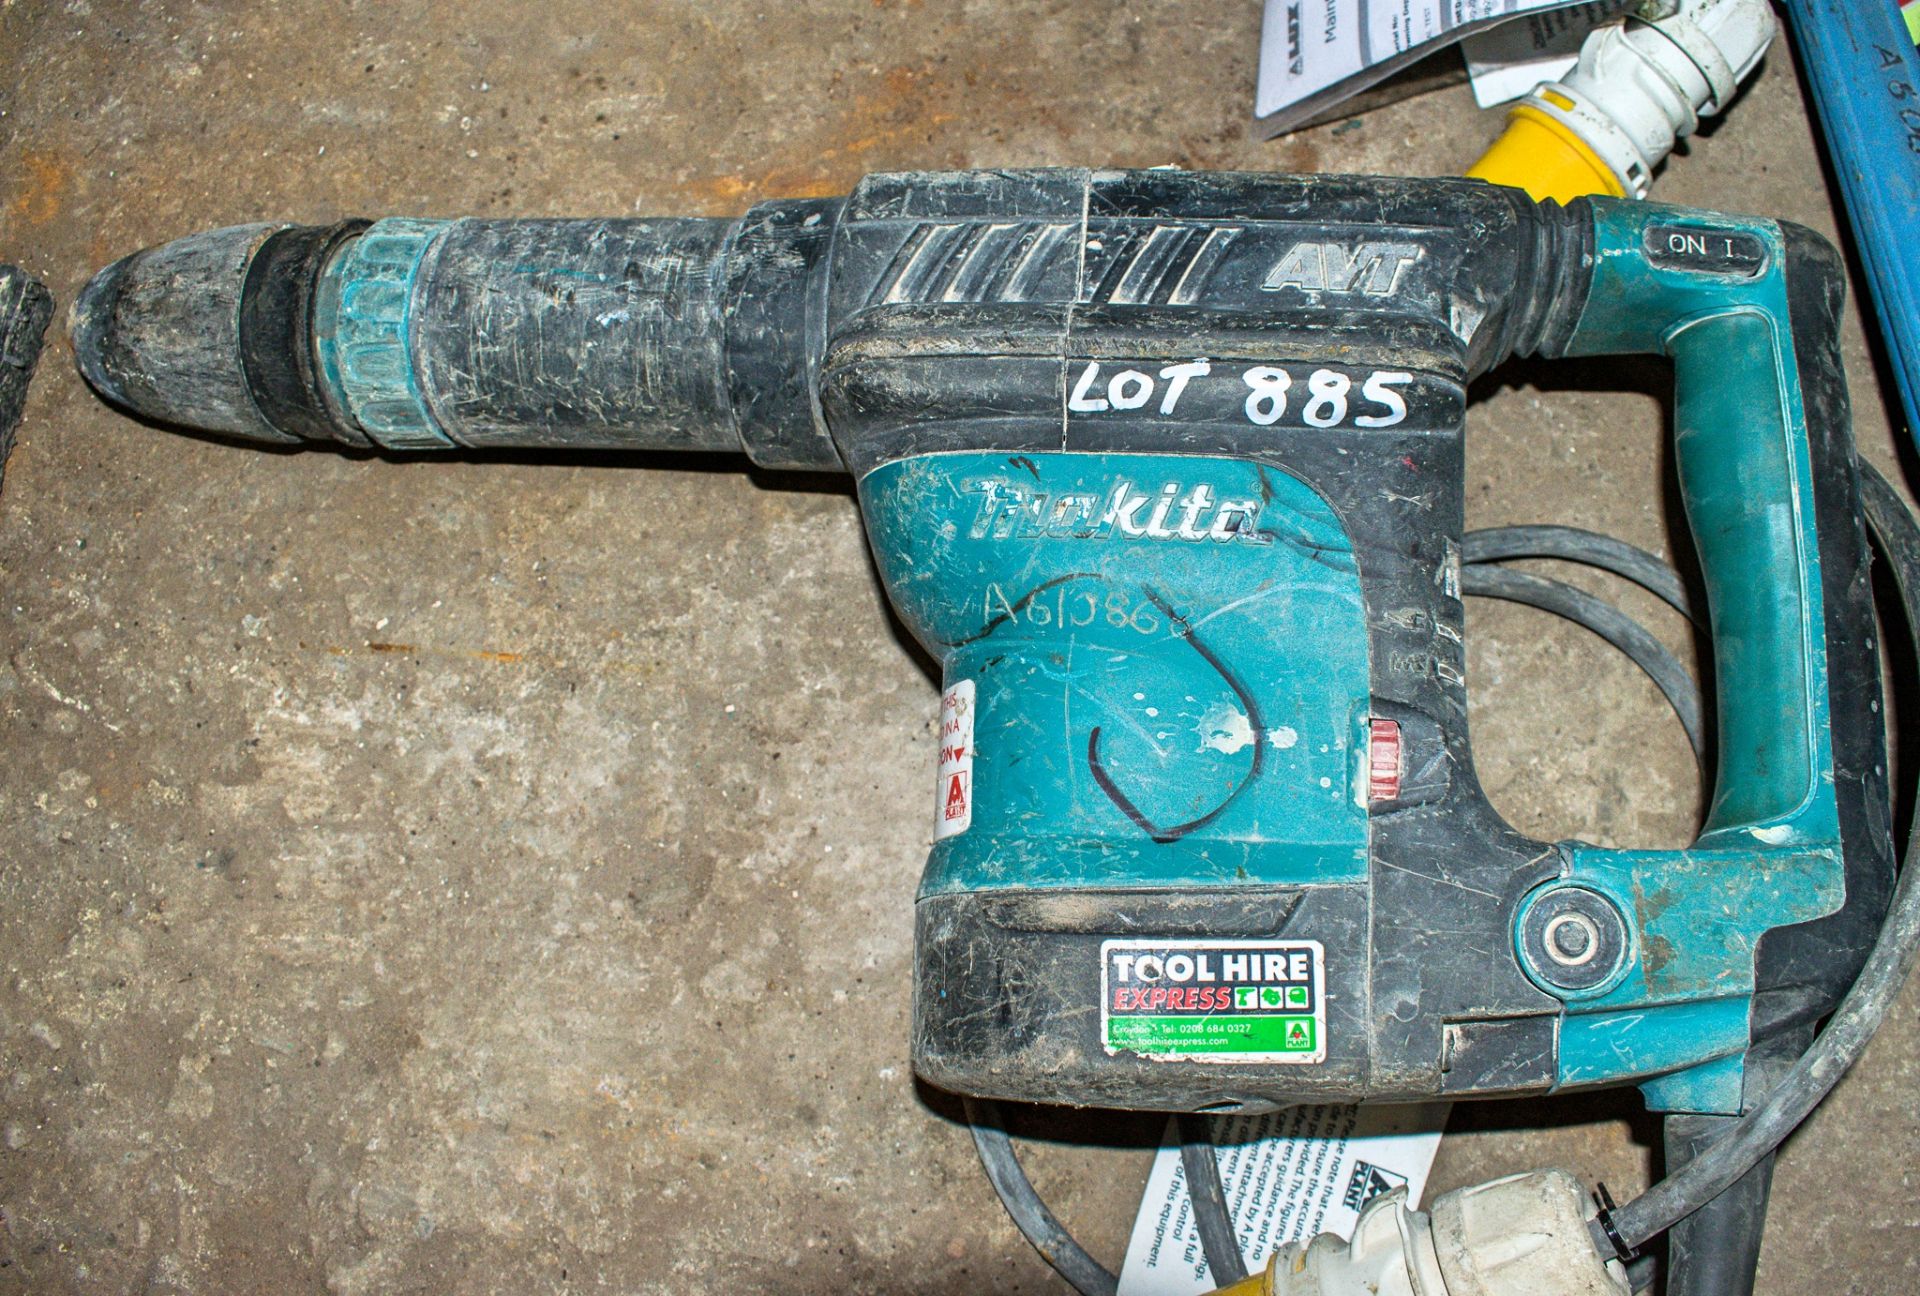 Makita 110v SDS rotary hammer drill A610868